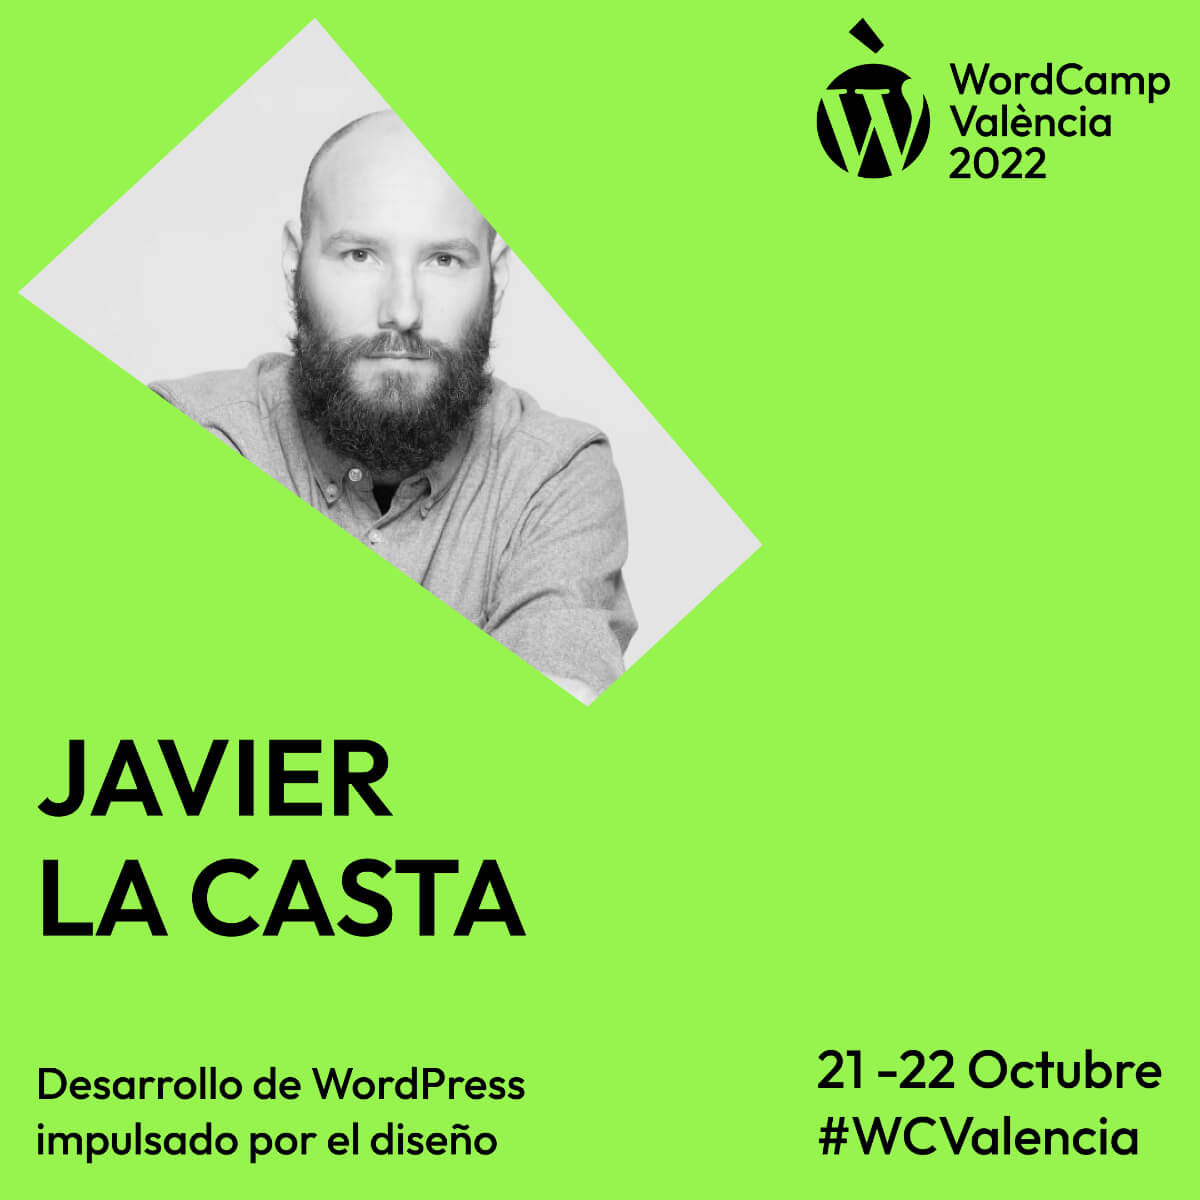 Javier La Casta WCVLC 2022